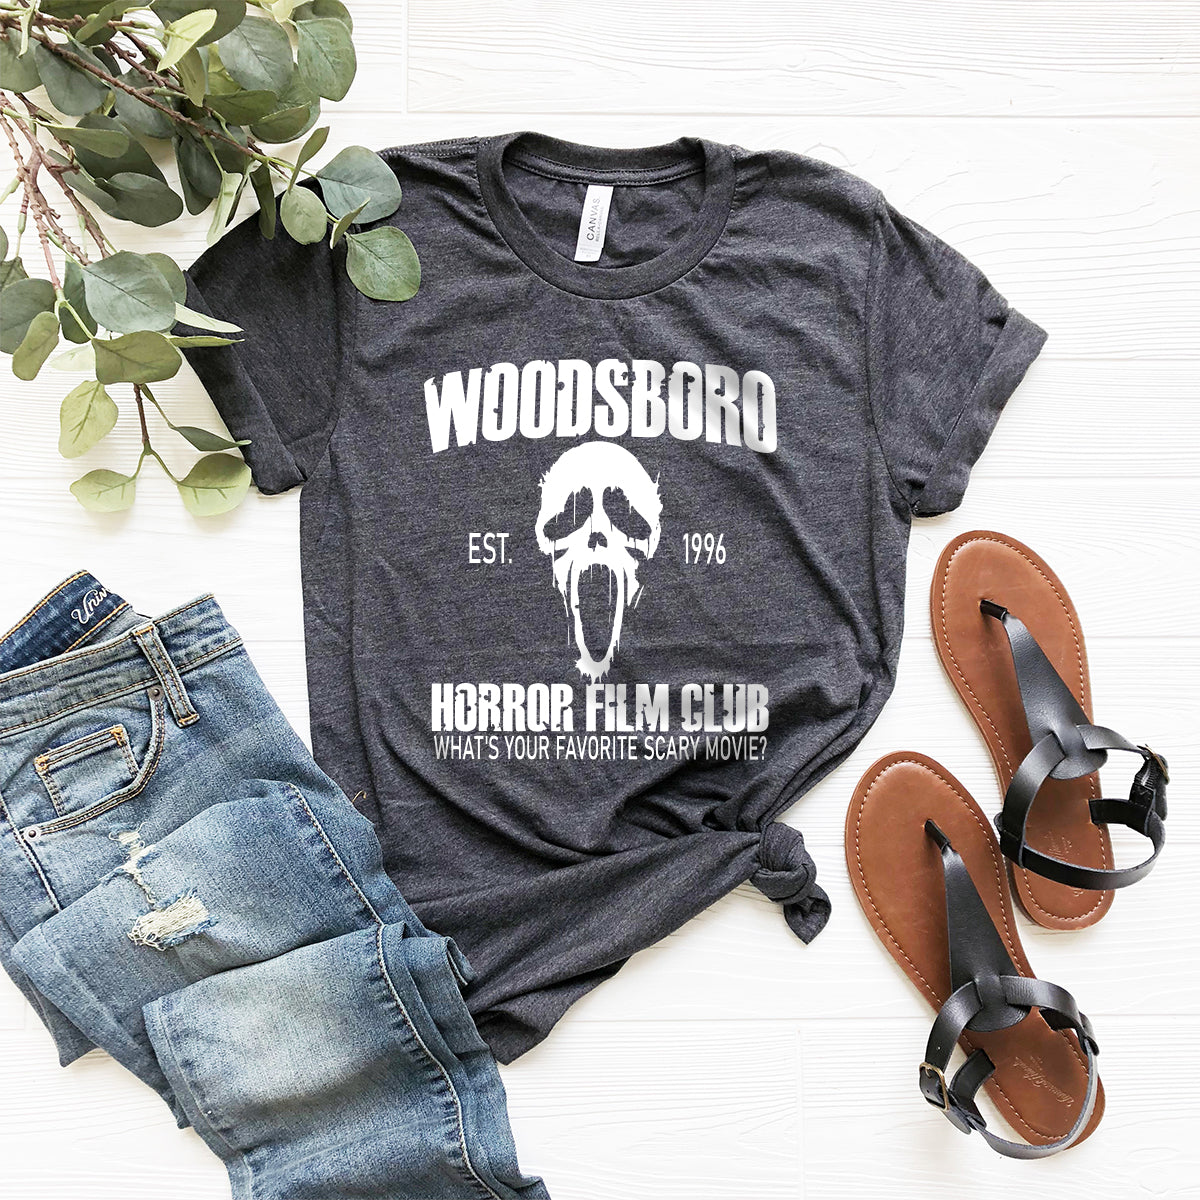 Halloween Horror Shirt, Halloween Tee, Horror T-Shirt, Scream Shirt, Woodsboro Shirt, Horror Film Club, Scream Movie Shirt, Scream T-Shirt - Fastdeliverytees.com